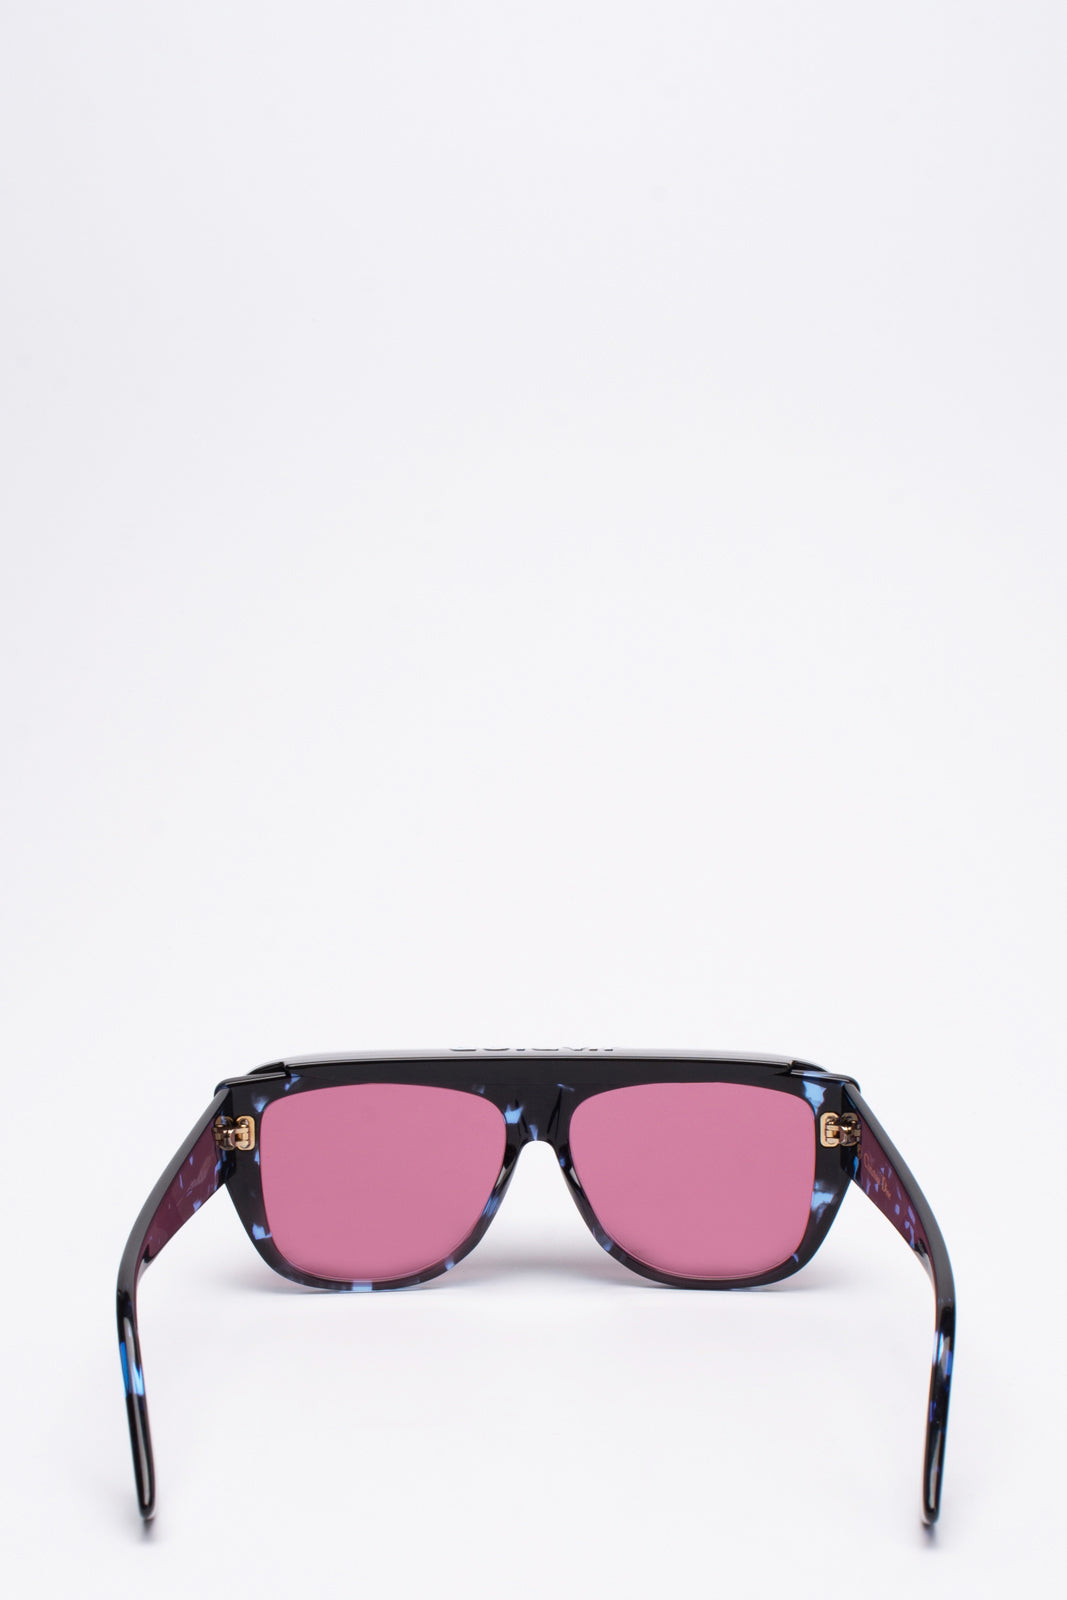 dior club 2 aviator black sunglasses